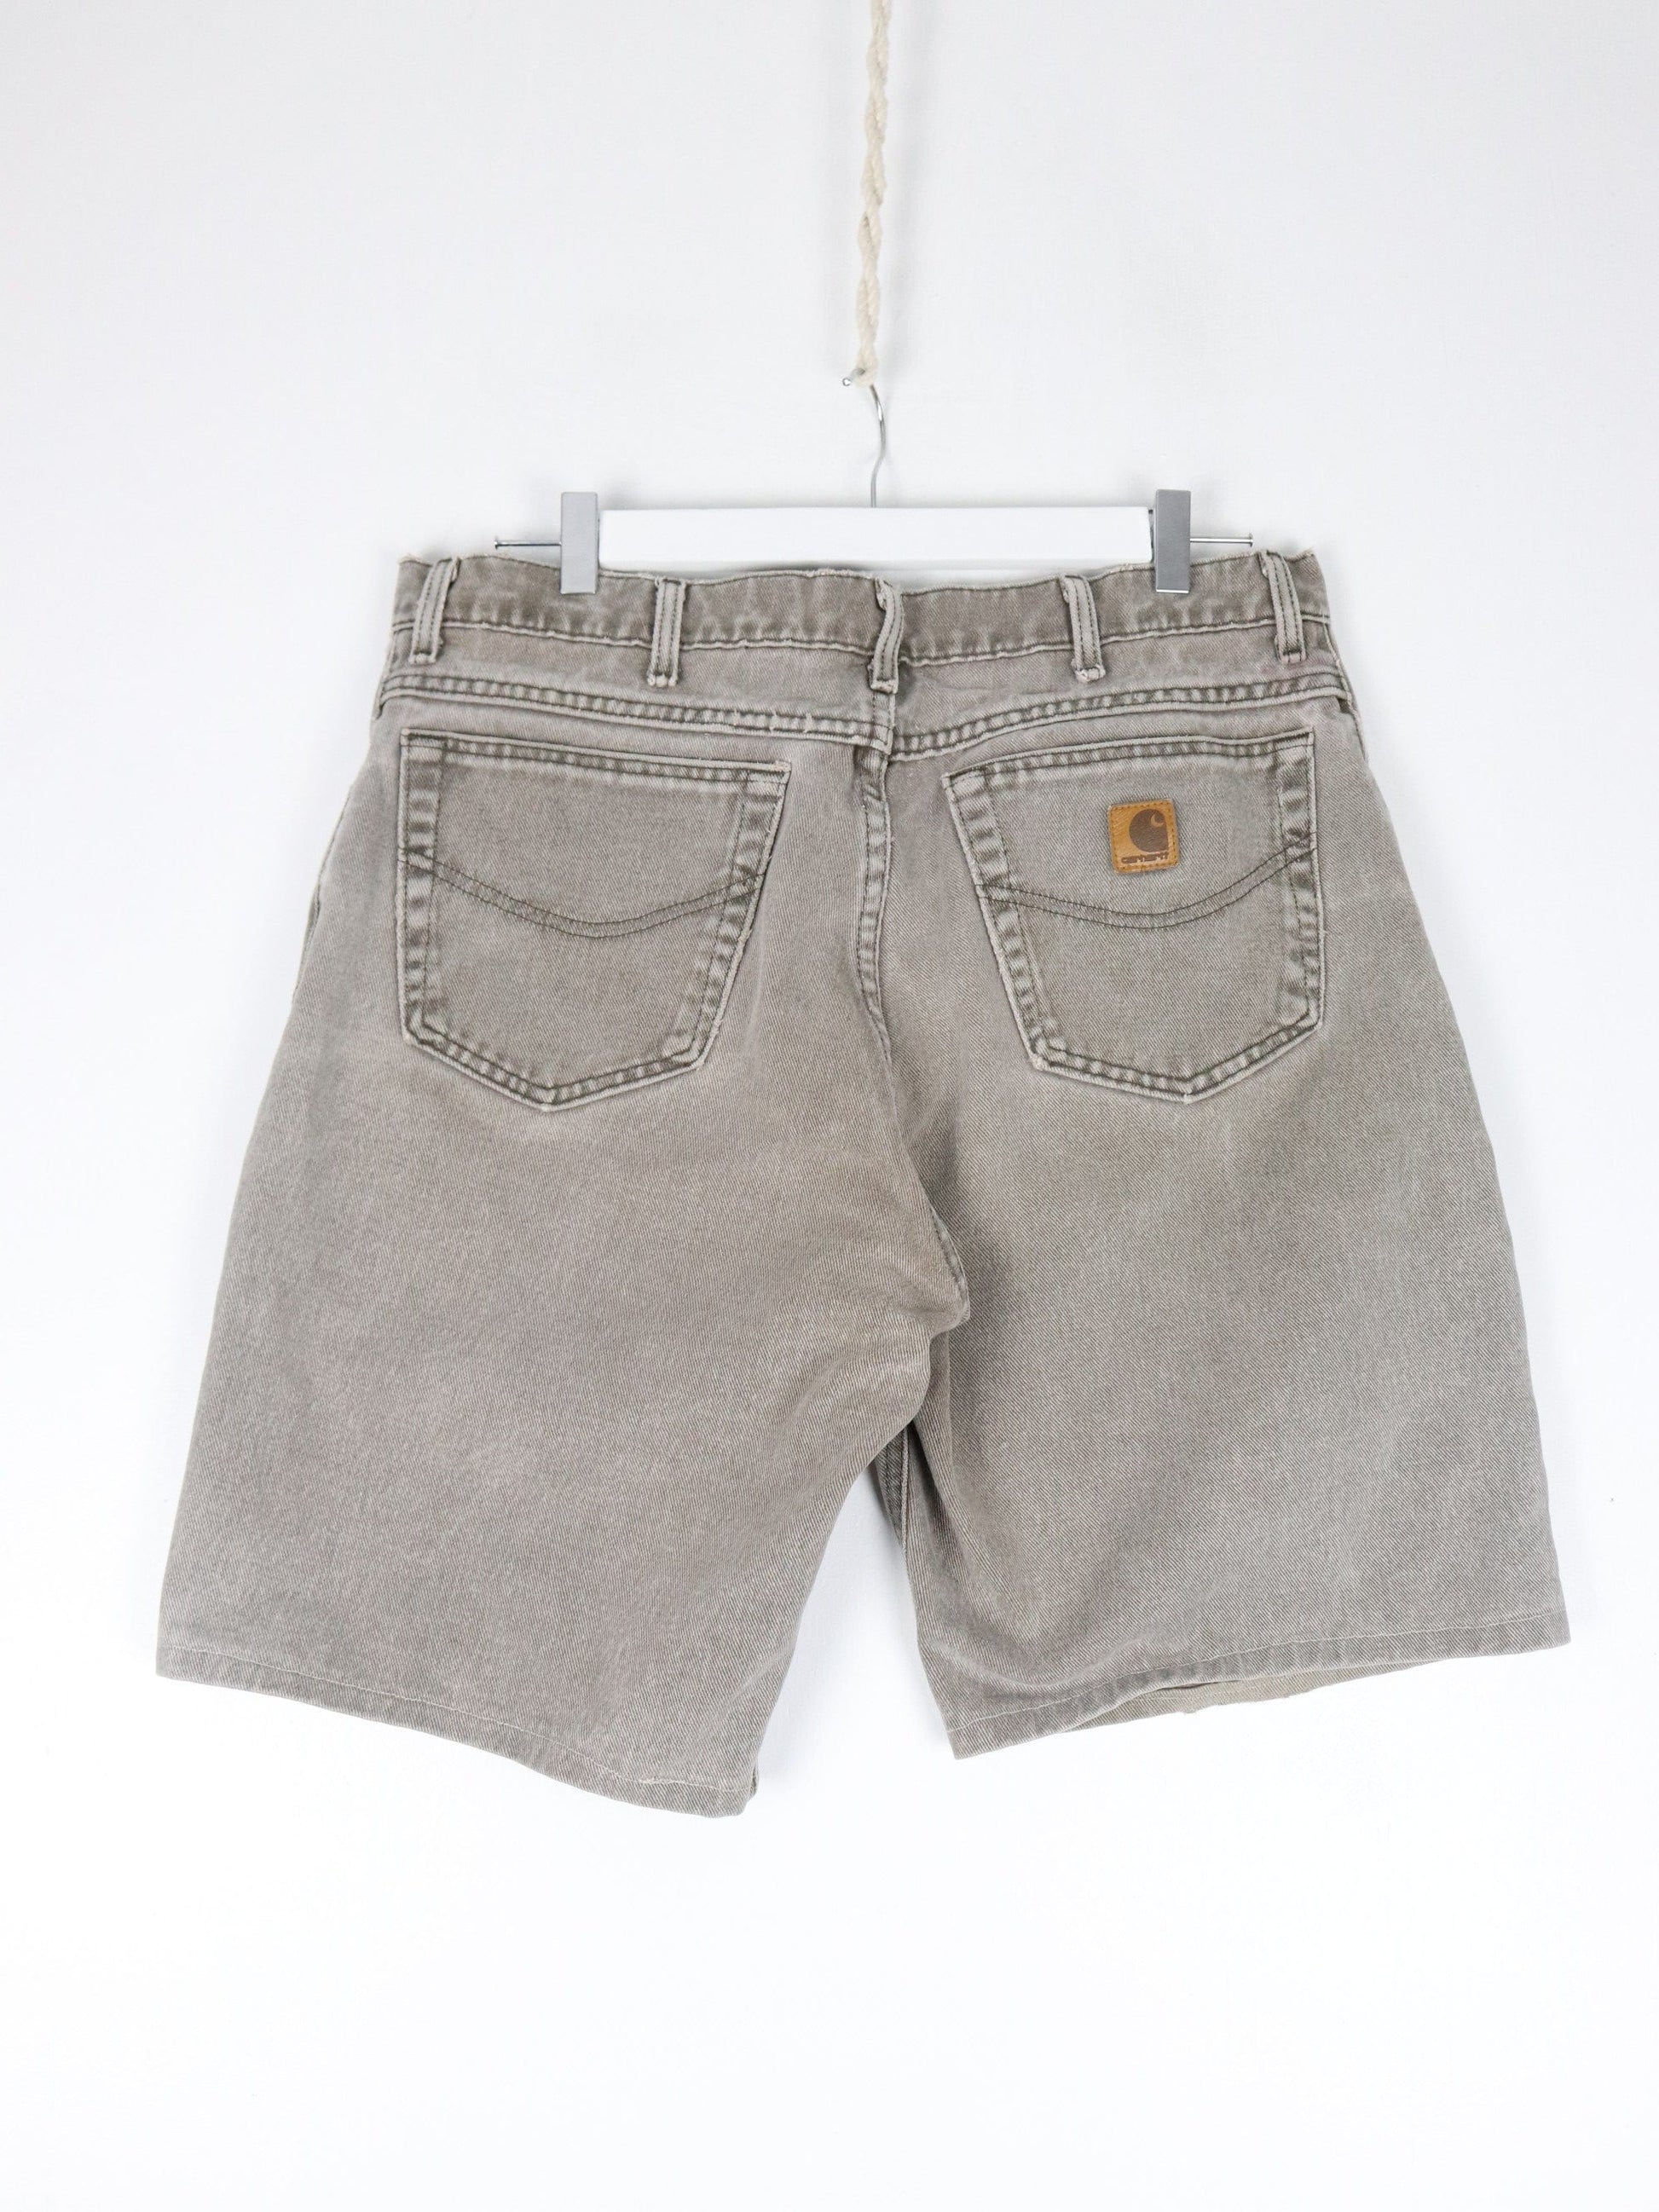 Carhartt Shorts Vintage Carhartt Shorts Mens 34 Brown Denim Work Wear